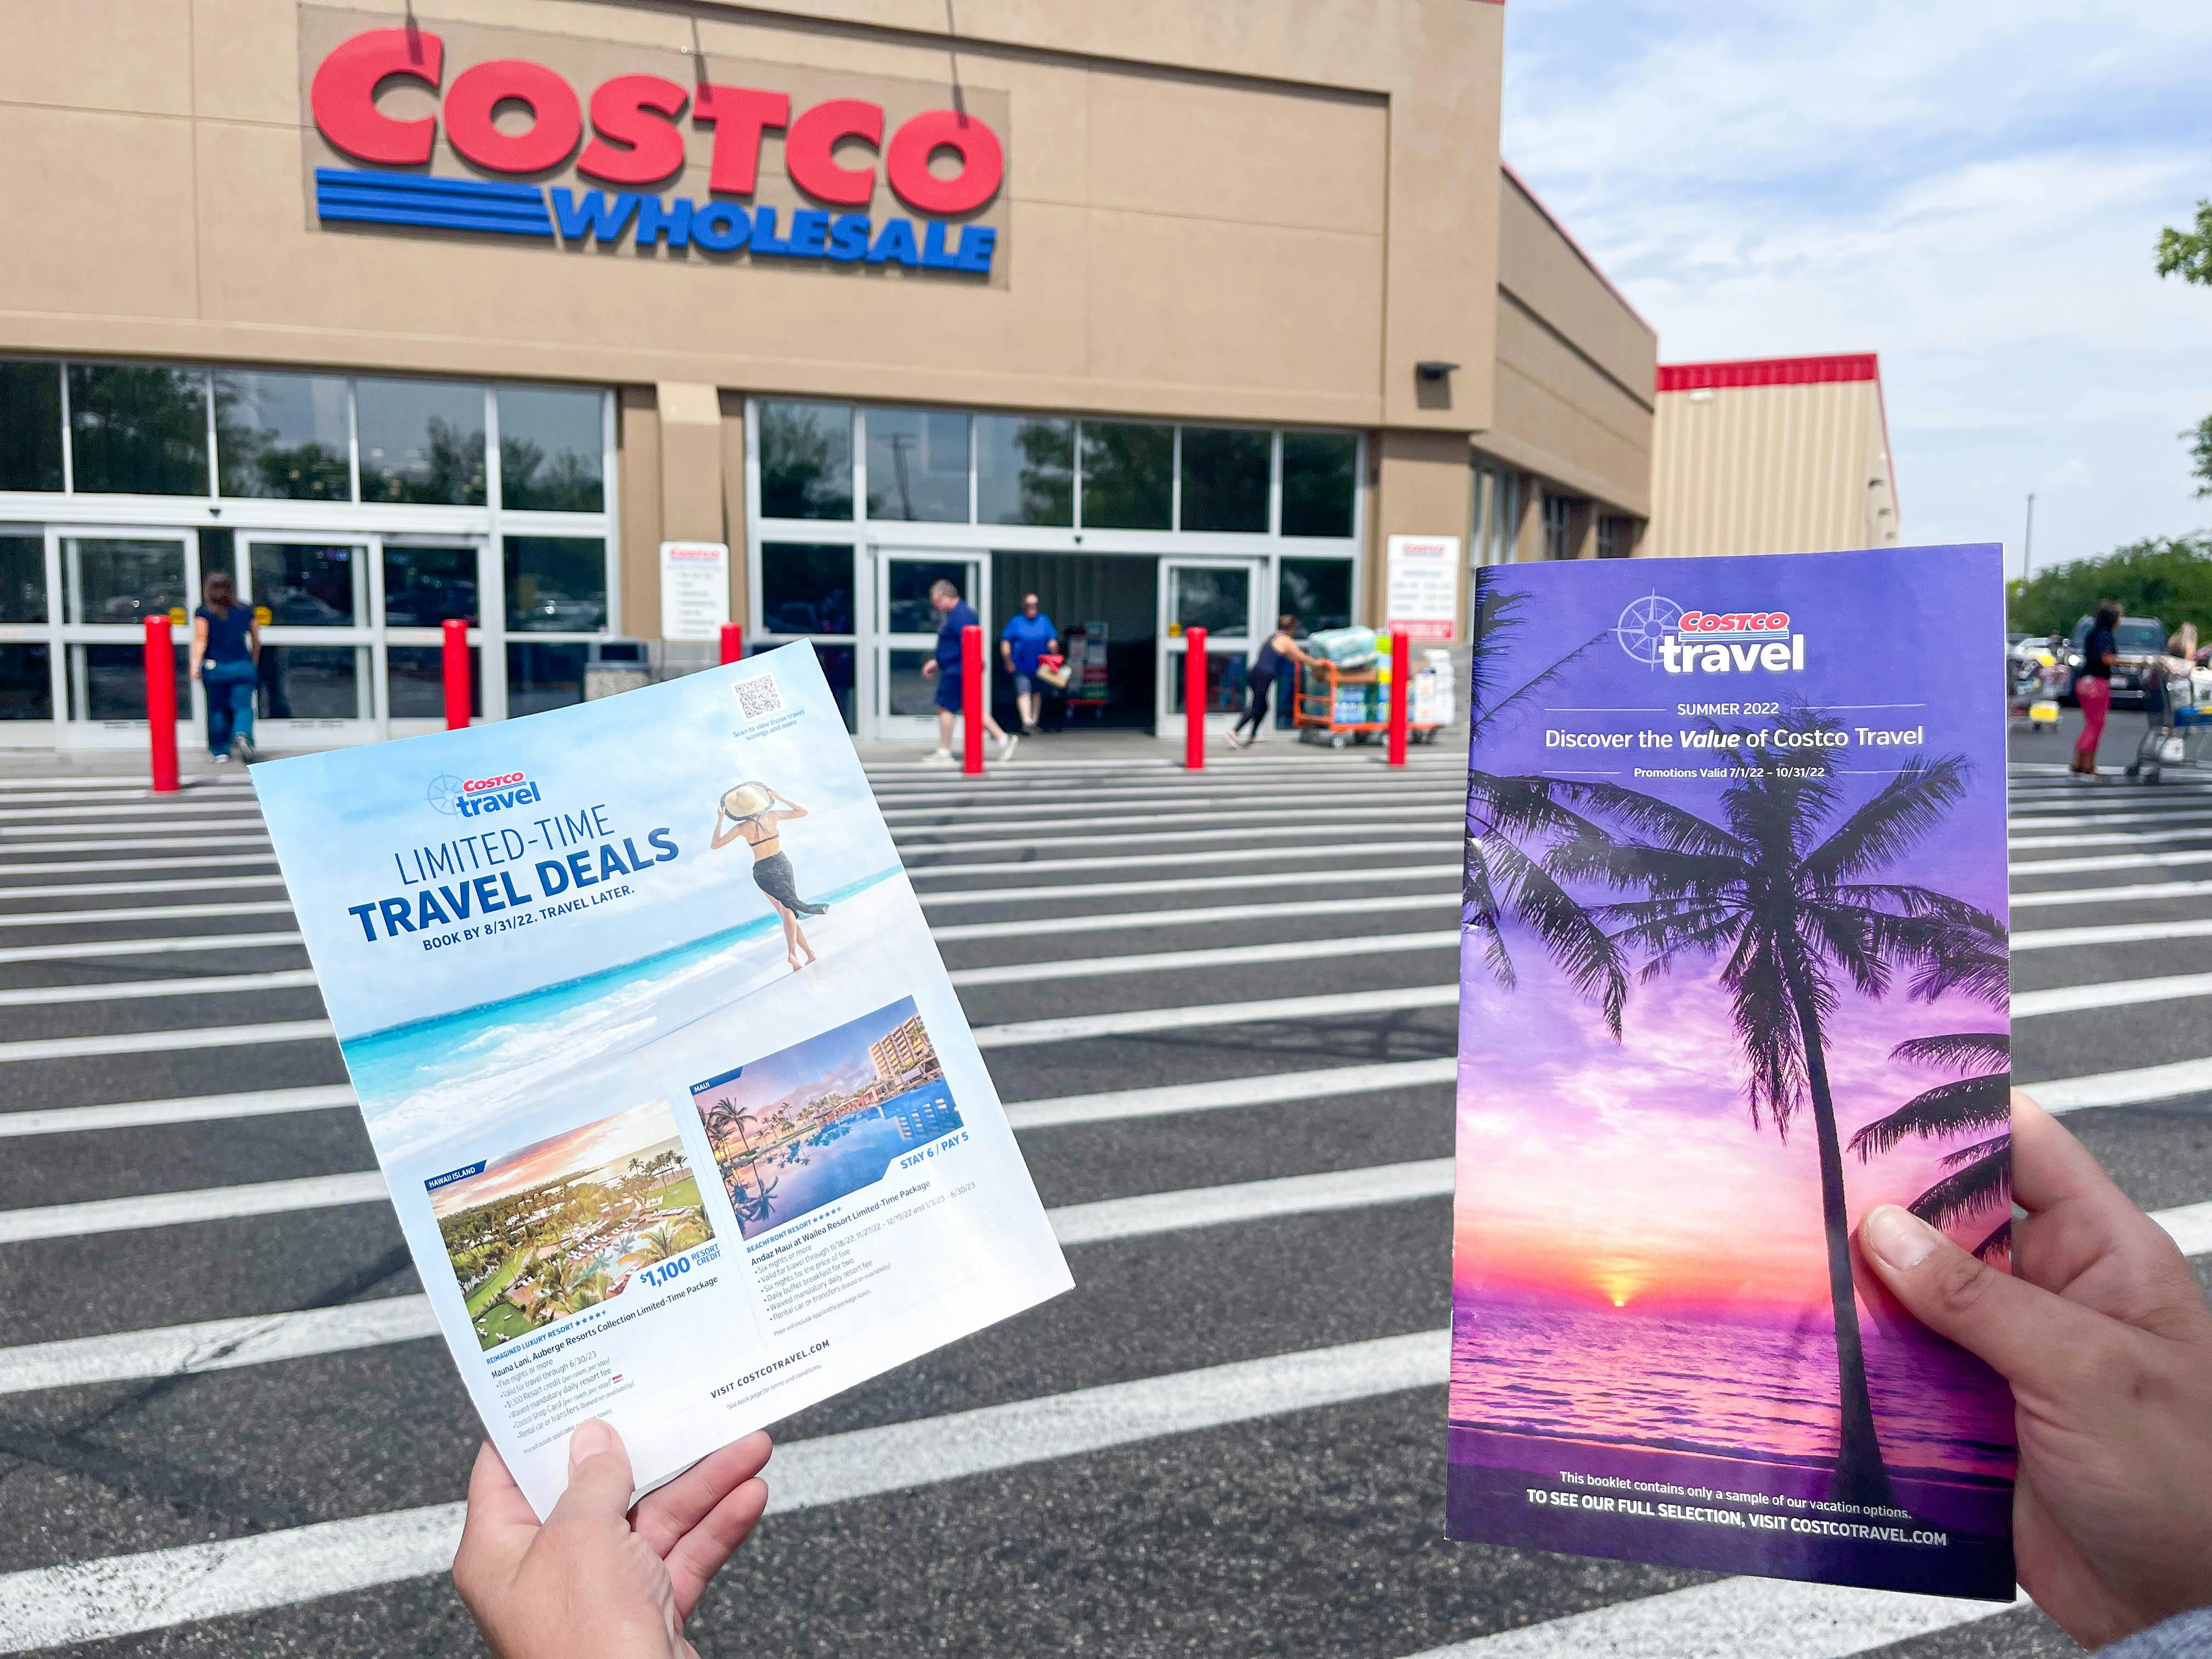 costco hawaii travel promotion code